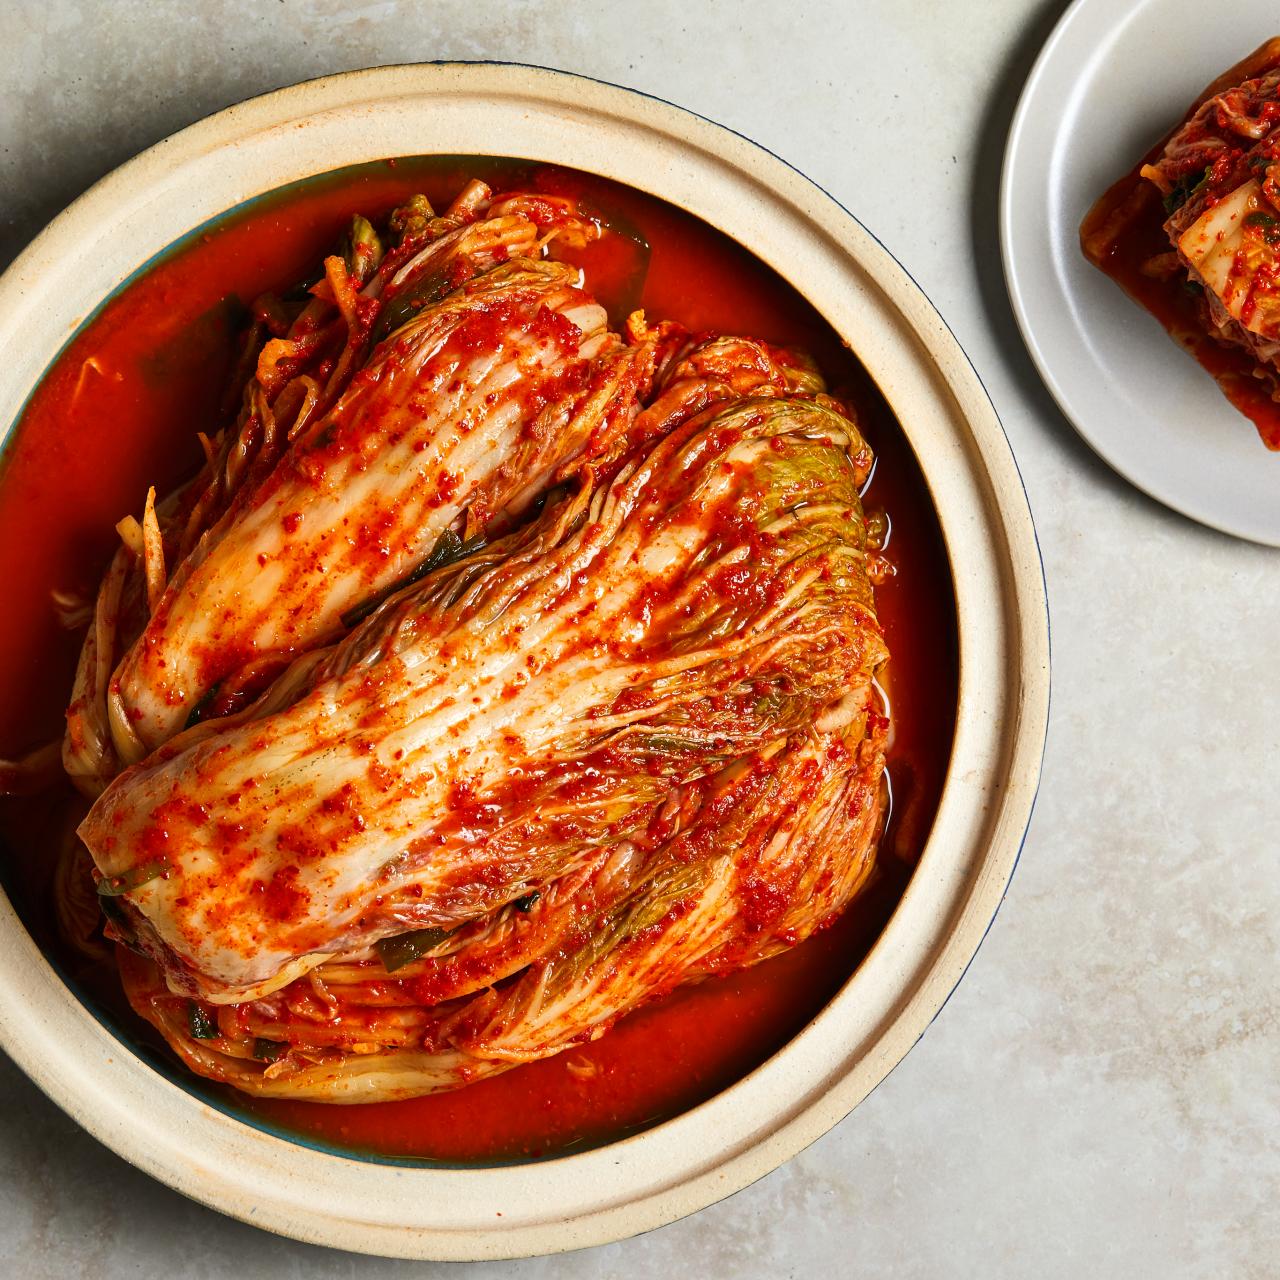 New kimchi refrigerator - The Korea Times